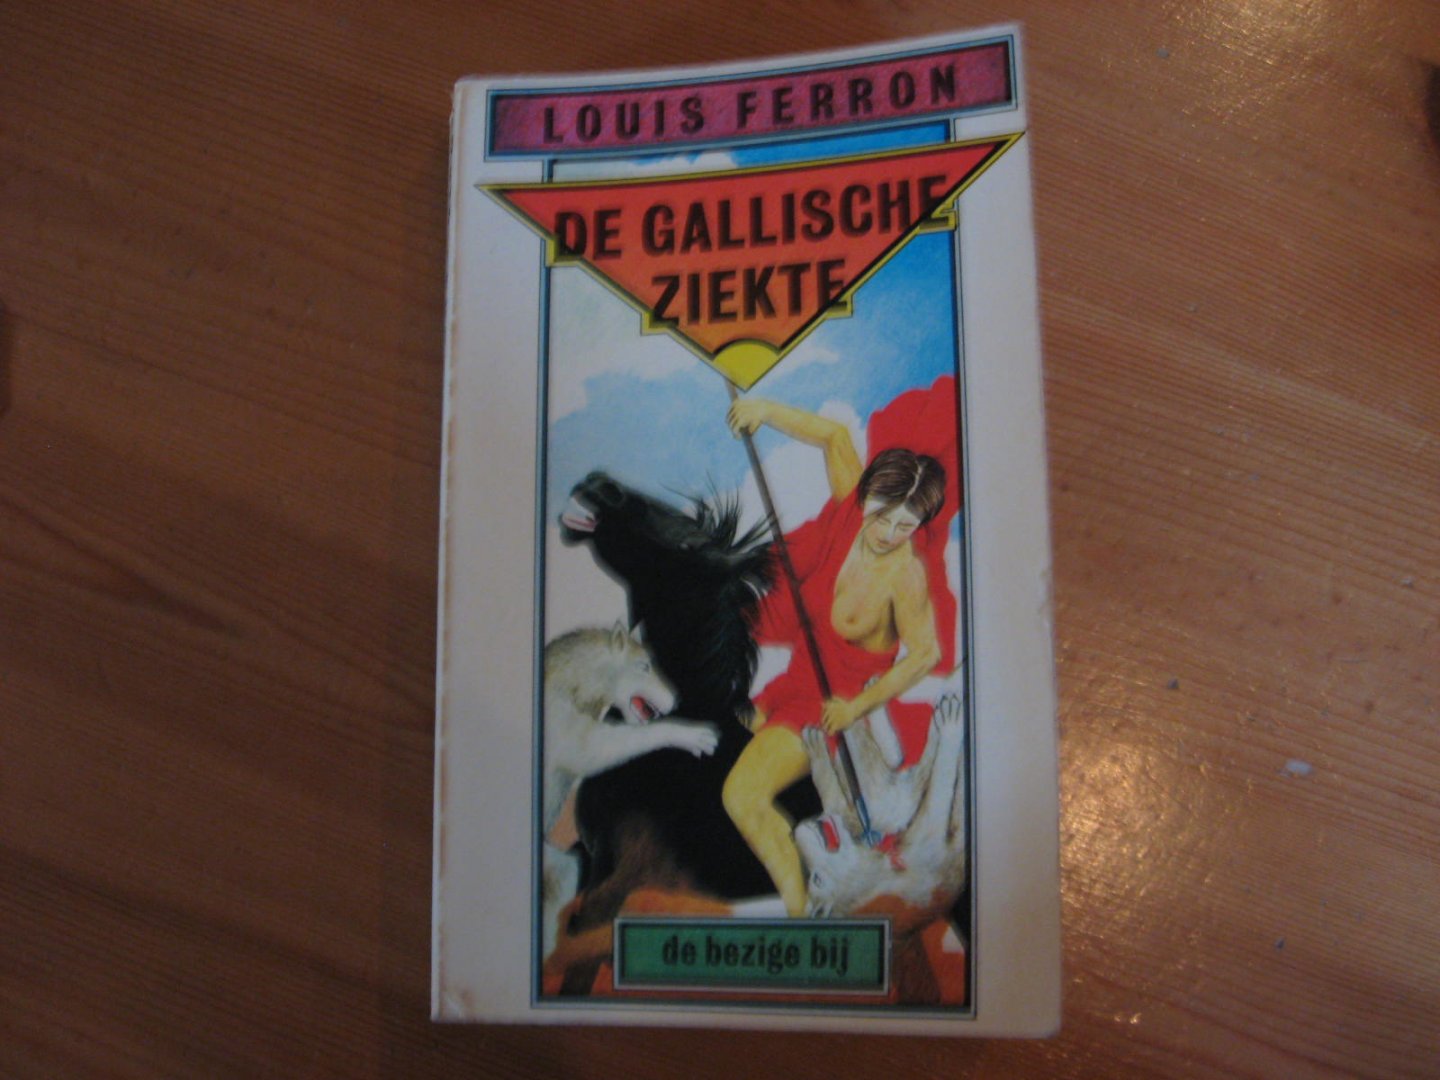 Ferron, Louis - De gallische ziekte